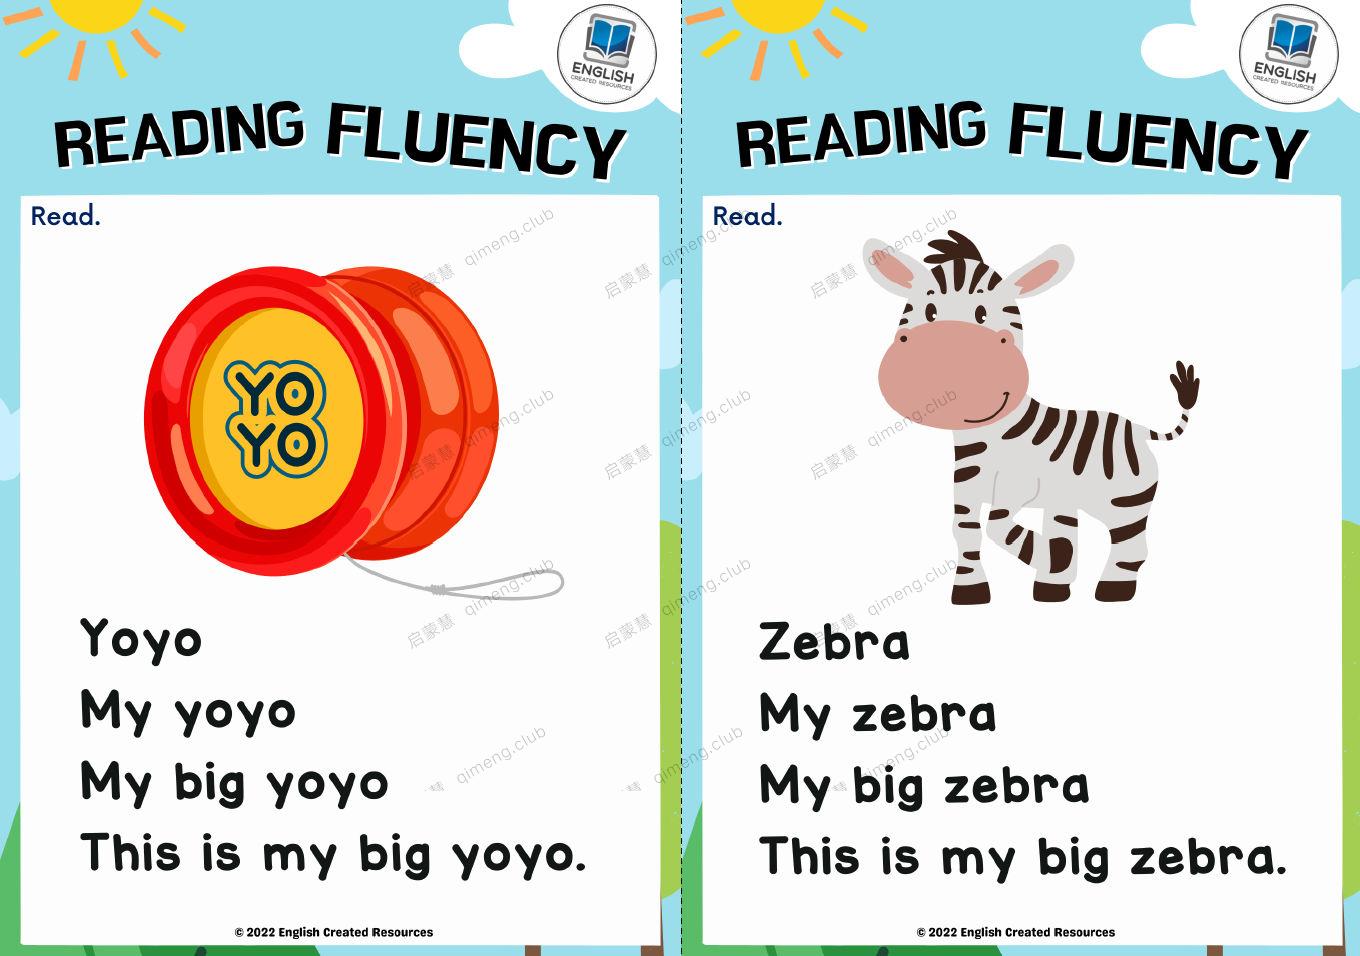 流利阅读训练《Reading Fluency》全7册